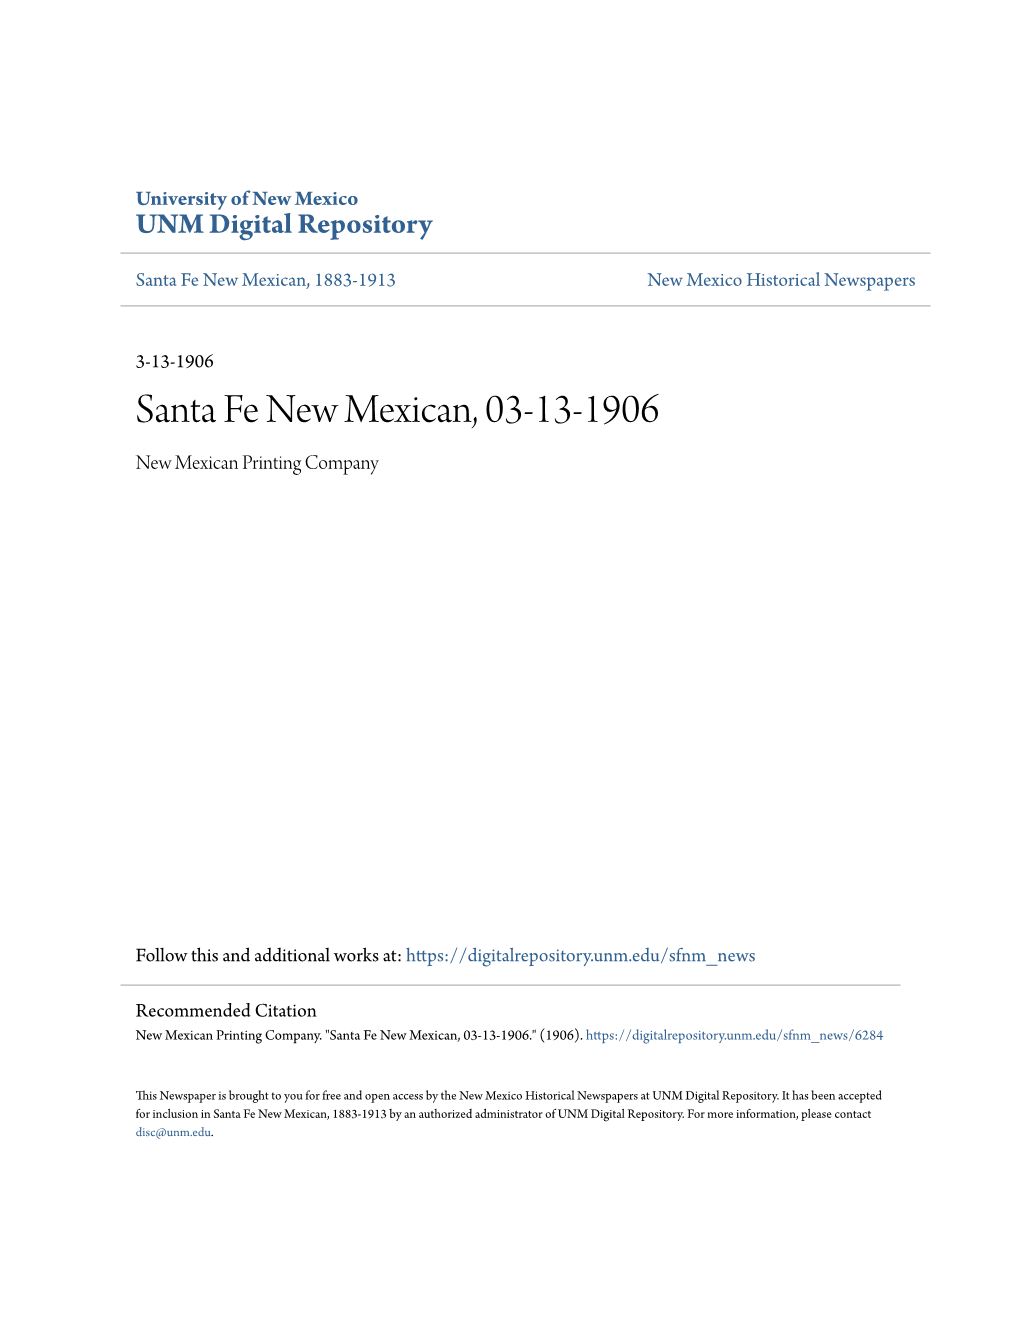 Santa Fe New Mexican, 03-13-1906 New Mexican Printing Company